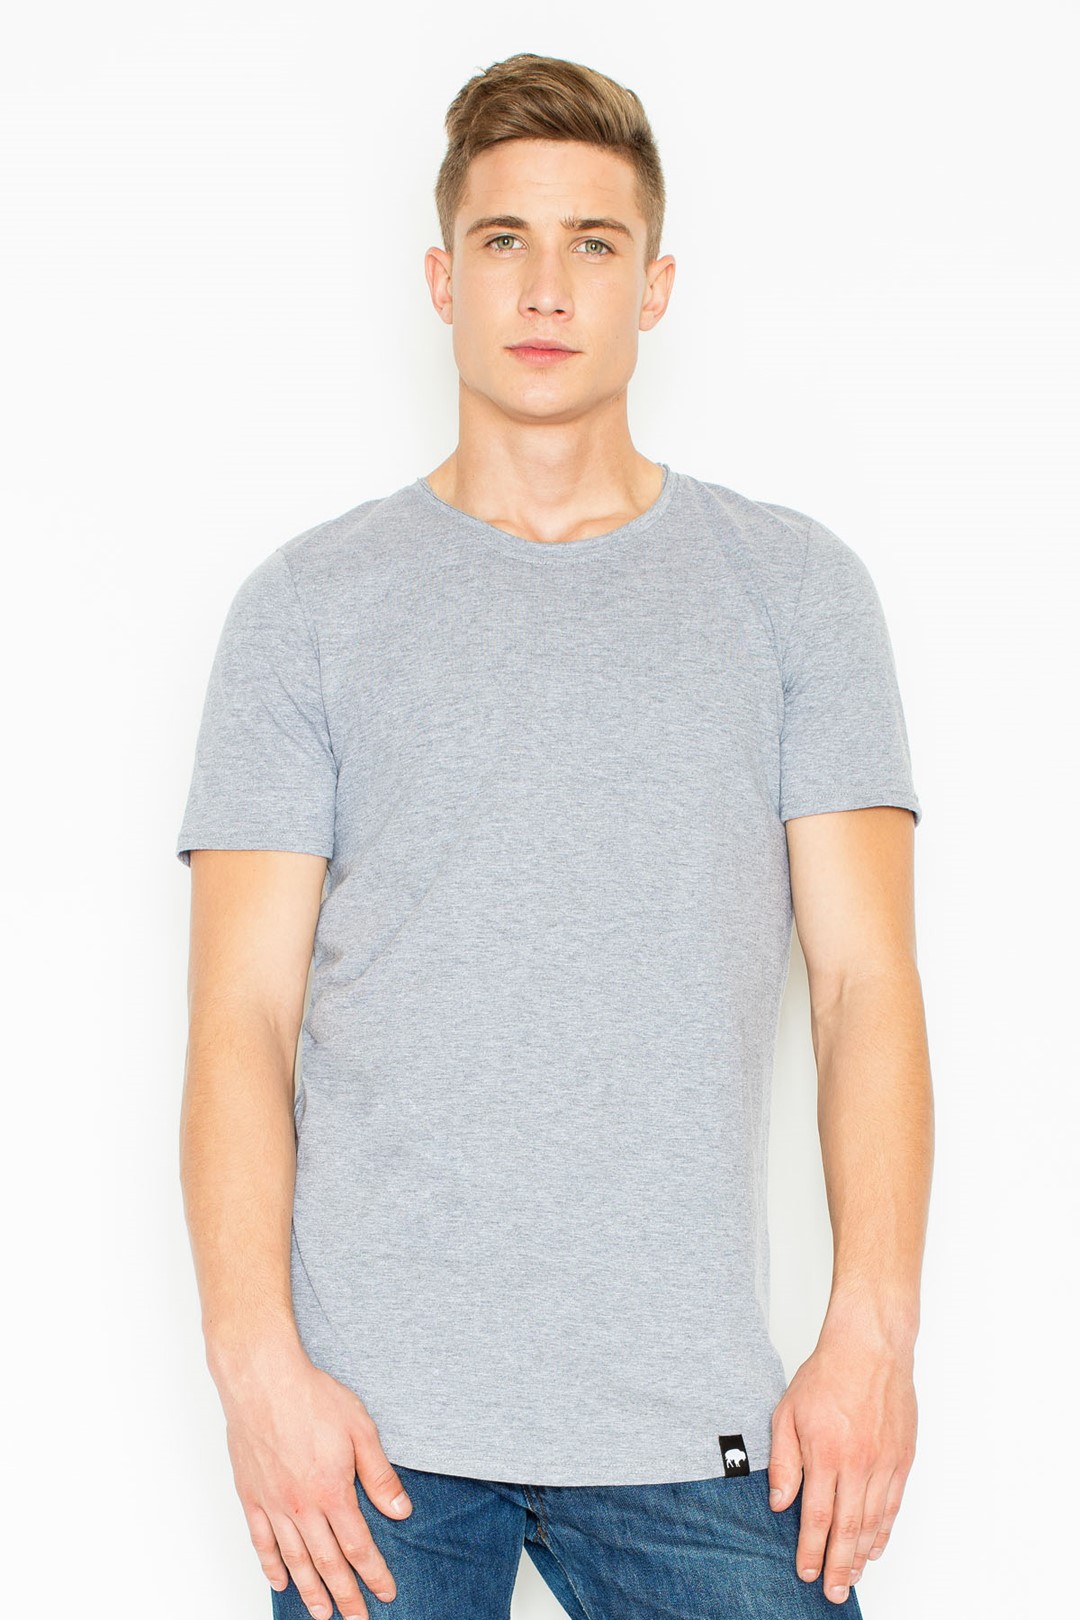 T-shirt V025 Grey S